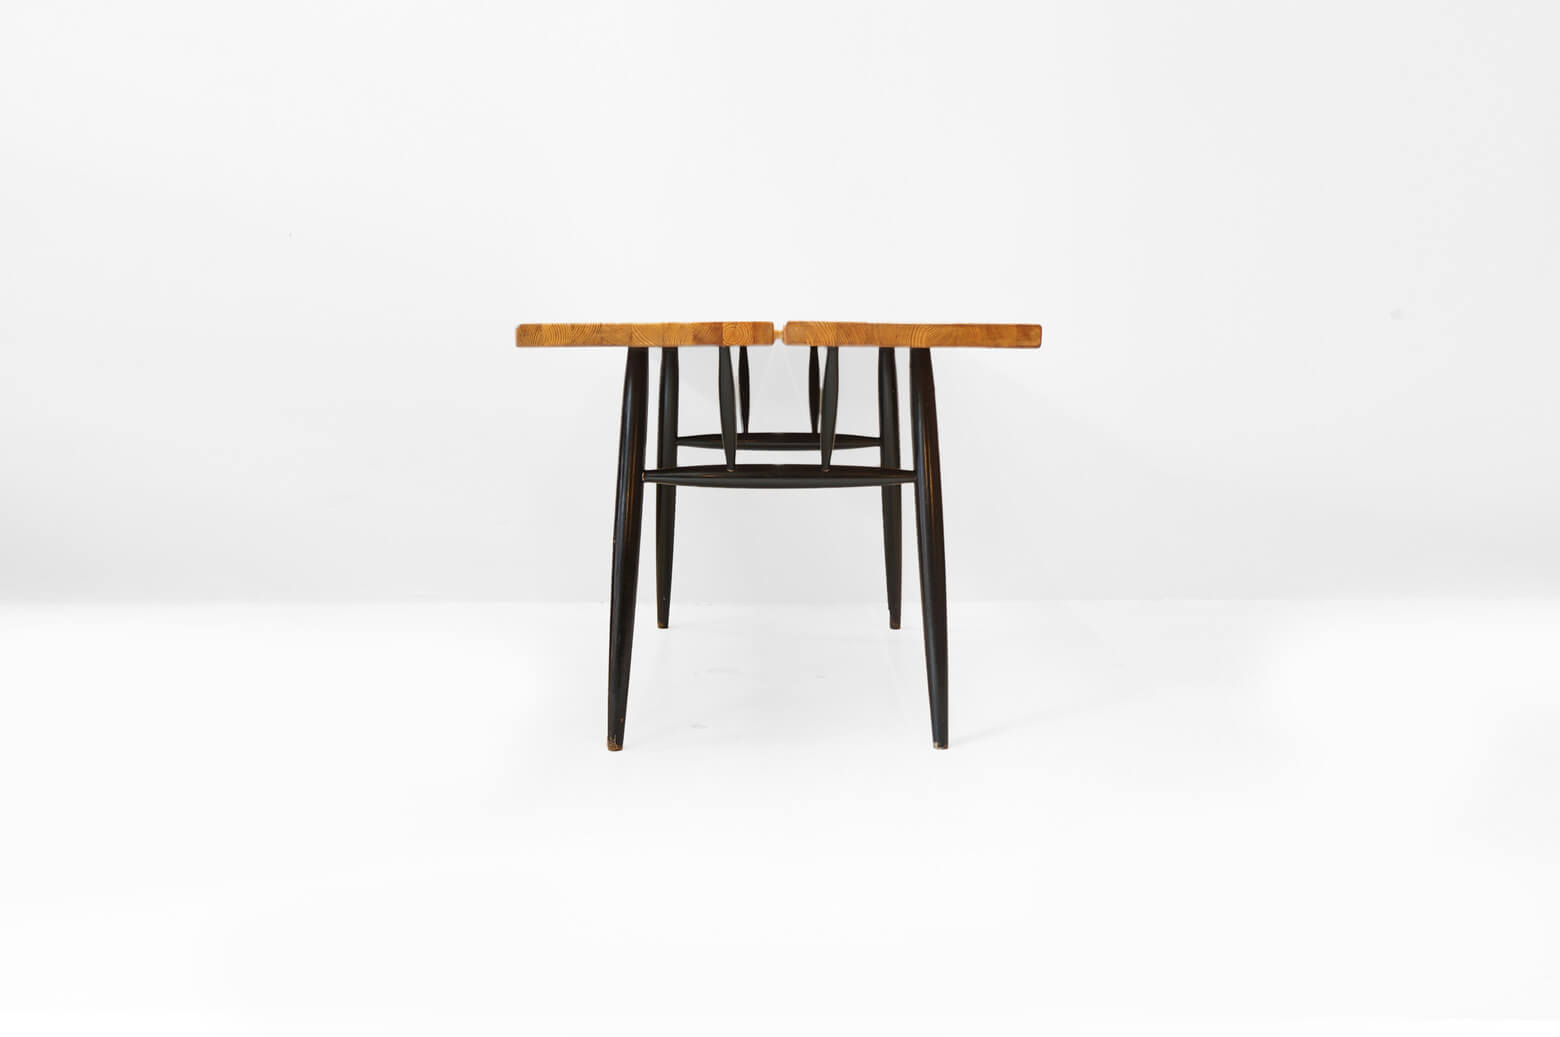 Vintage Pirkka Table Ilmari Tapiovaara design/ヴィンテージ ピルッカ テーブル イルマリ・タピオヴァーラ デザイン